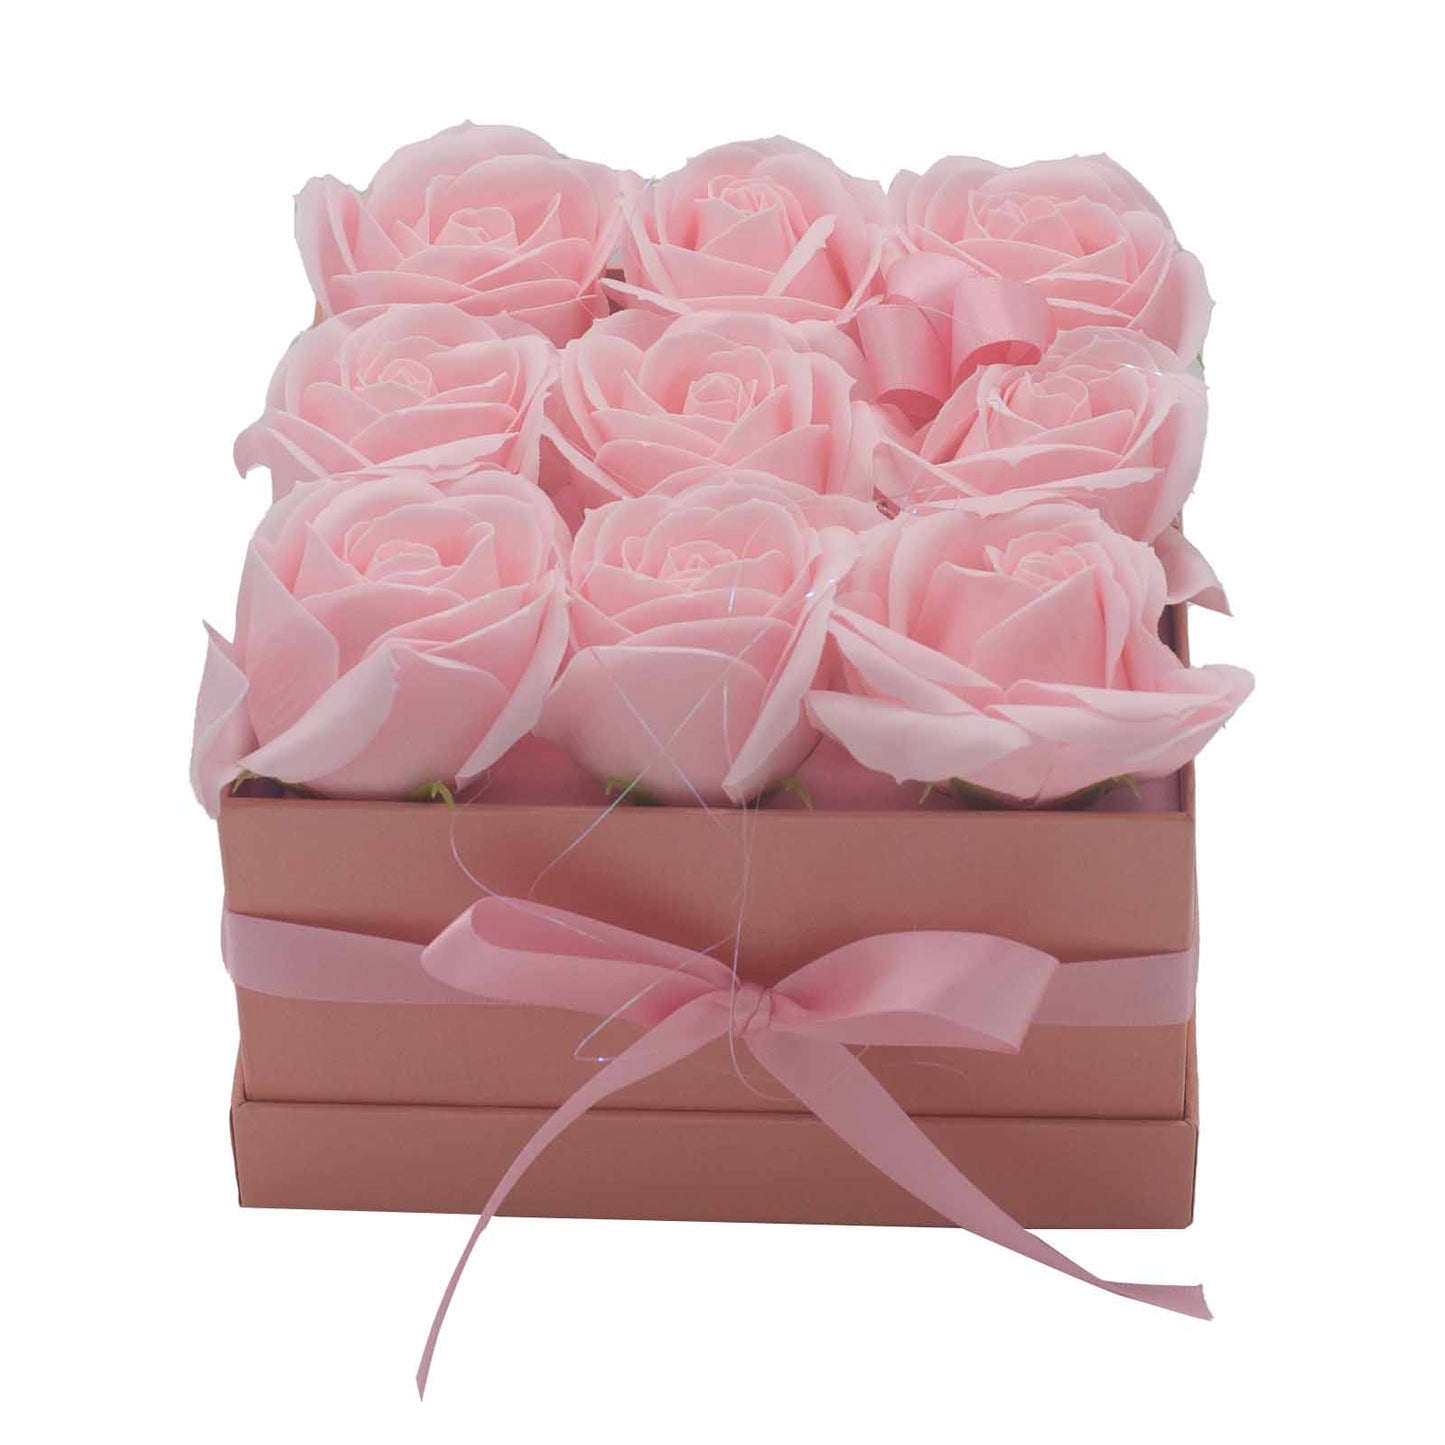 Roze zeeprozen cadeau box